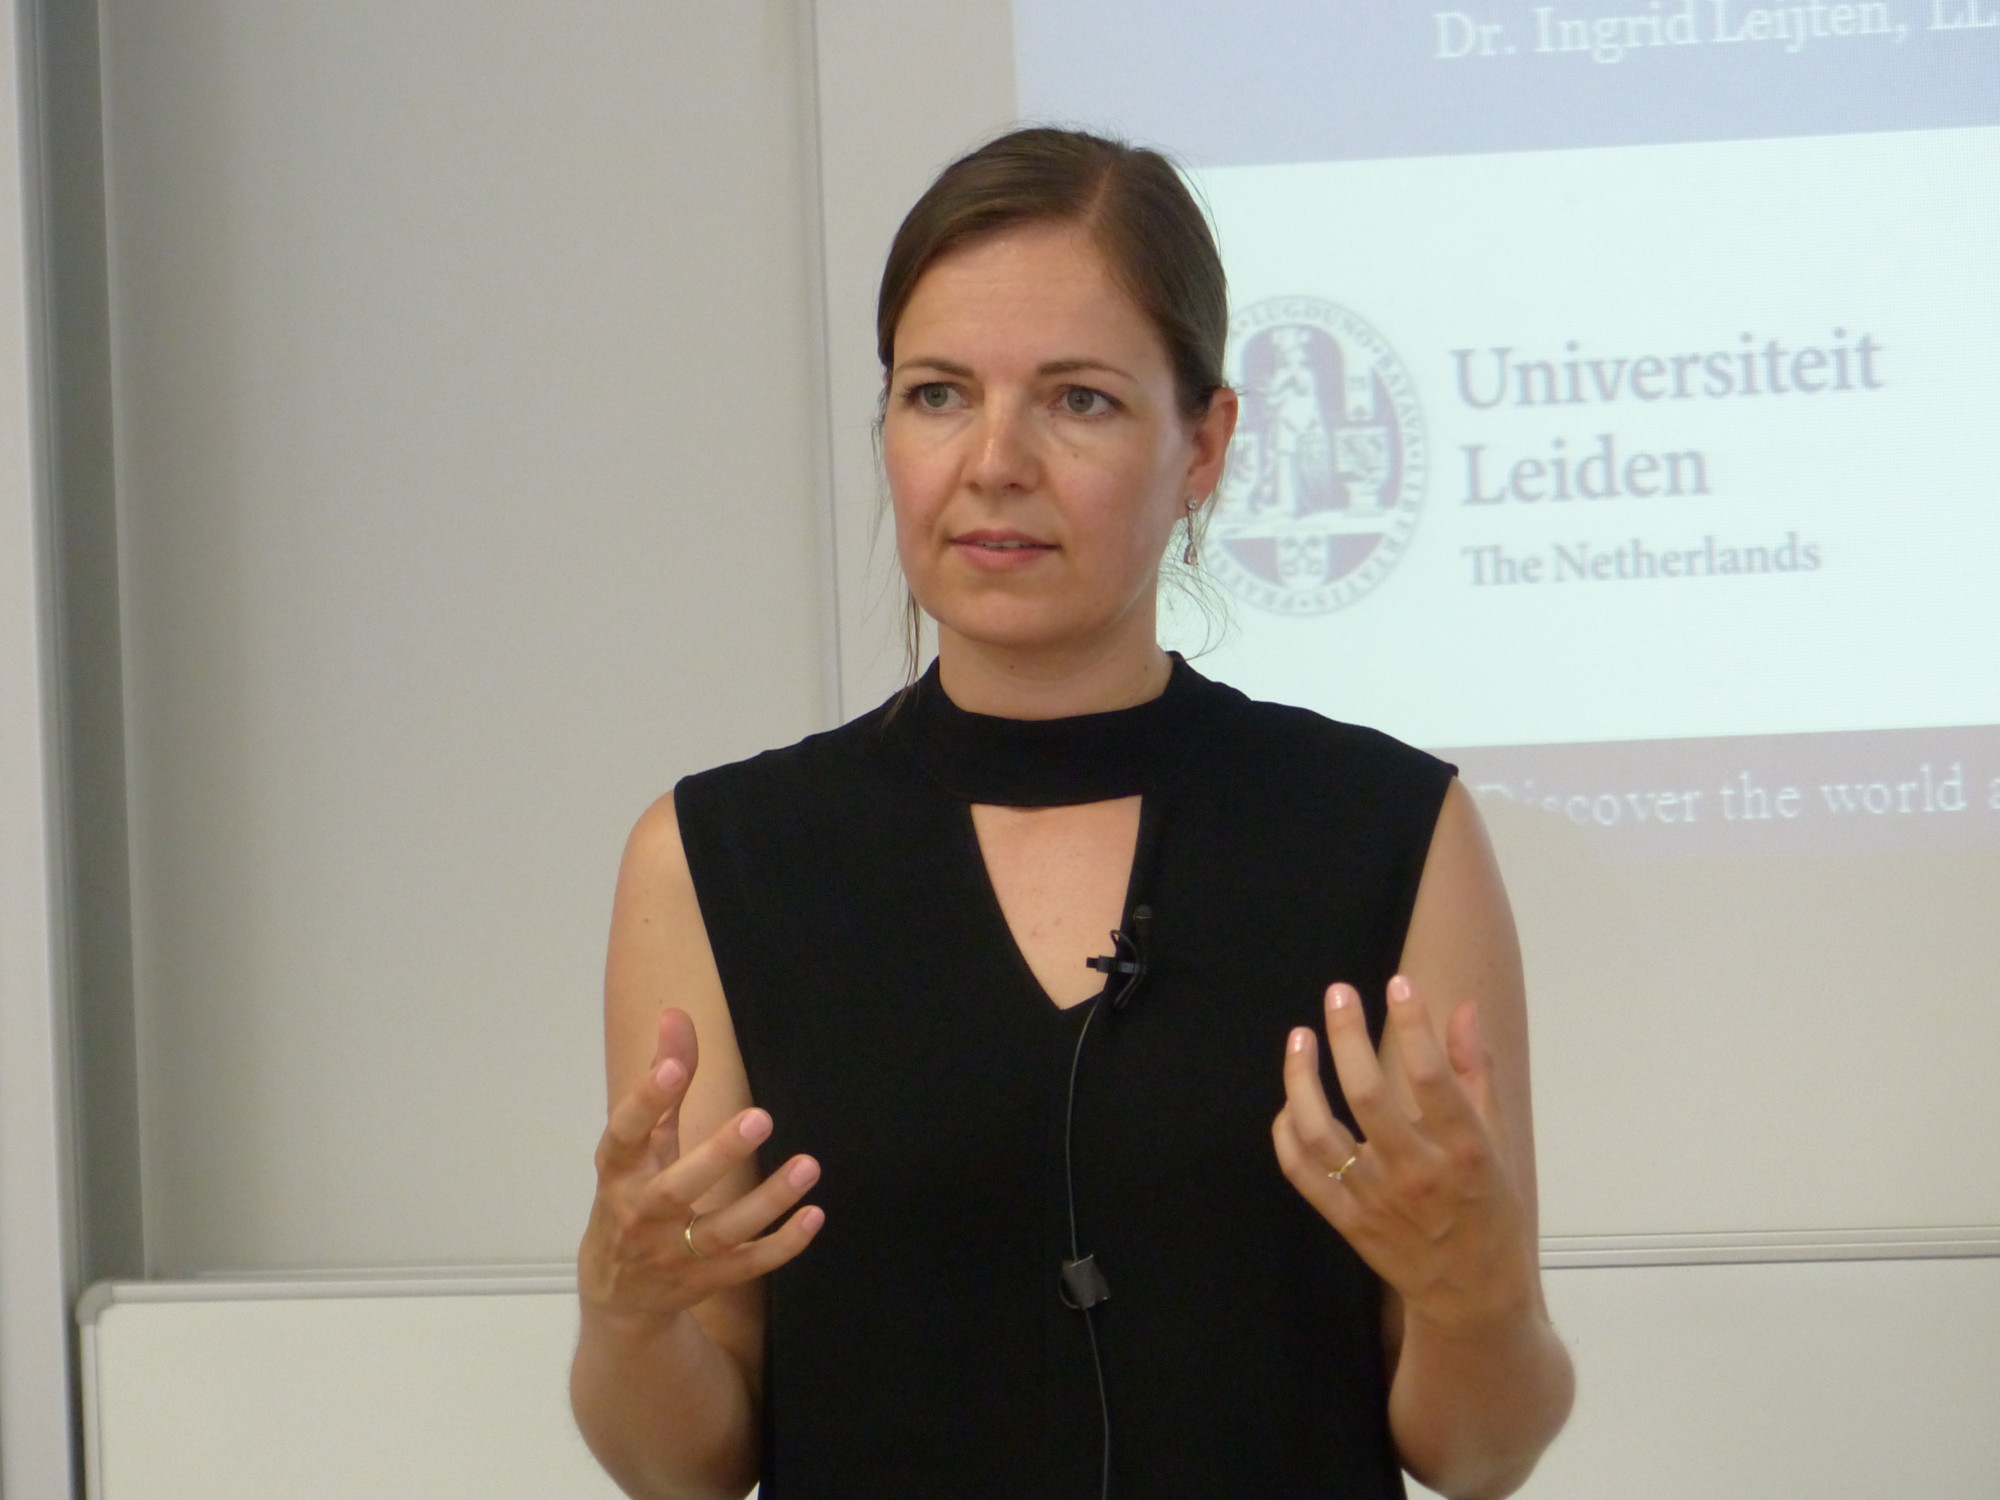 Ingrid Leijten giving her lecture on core socioeconomic rights